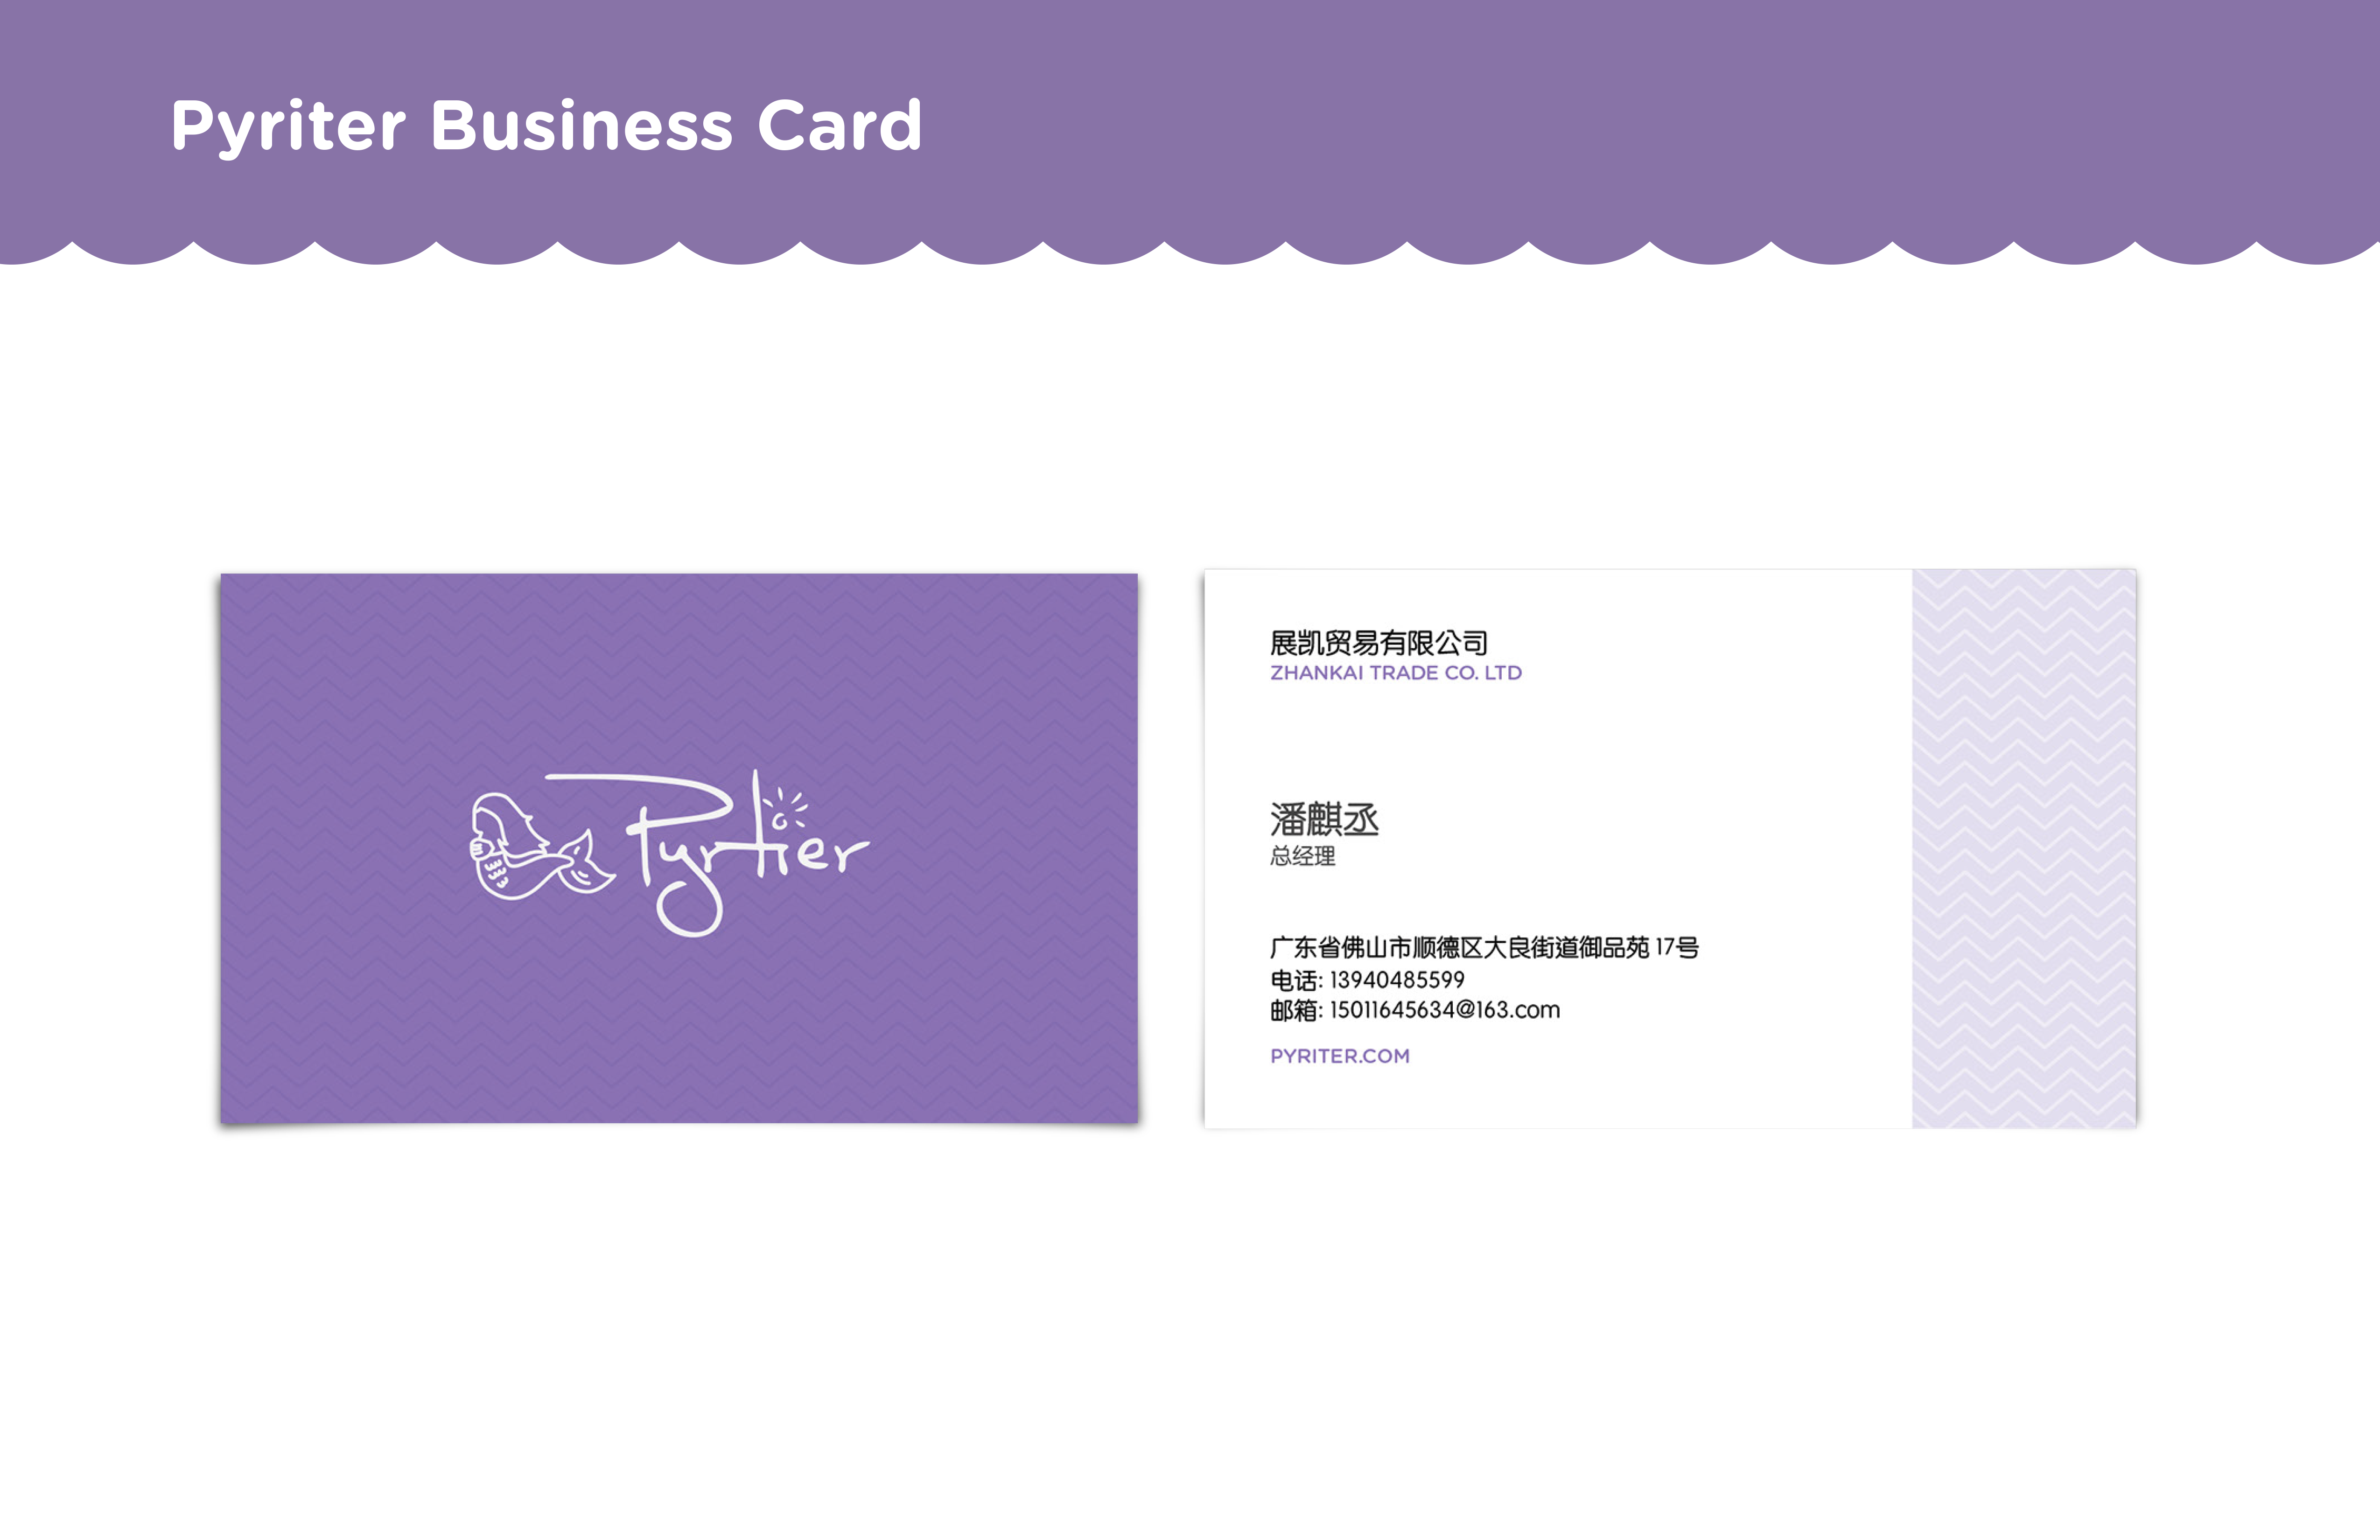 Pyriter Business Card Design